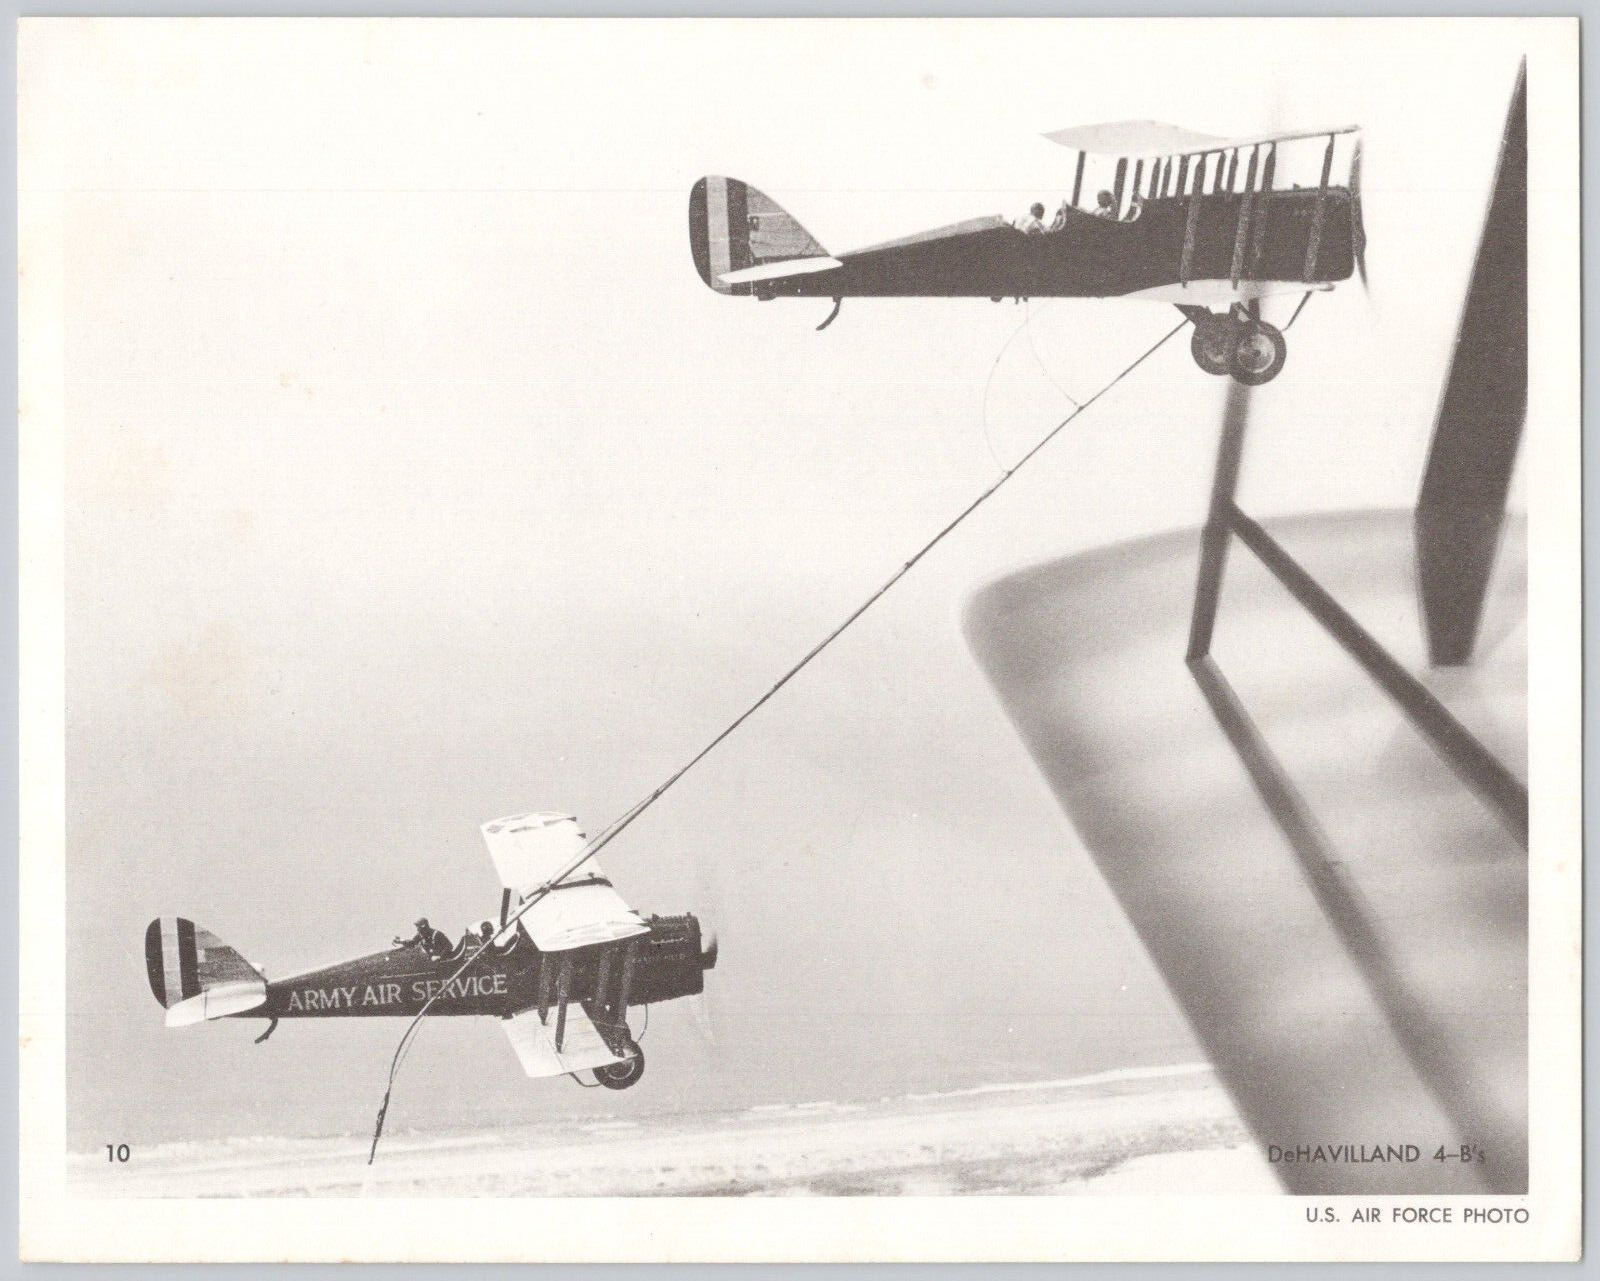 Photograph Dehavilland 4-B Army Air Service Vintage Military Aviation 8x10